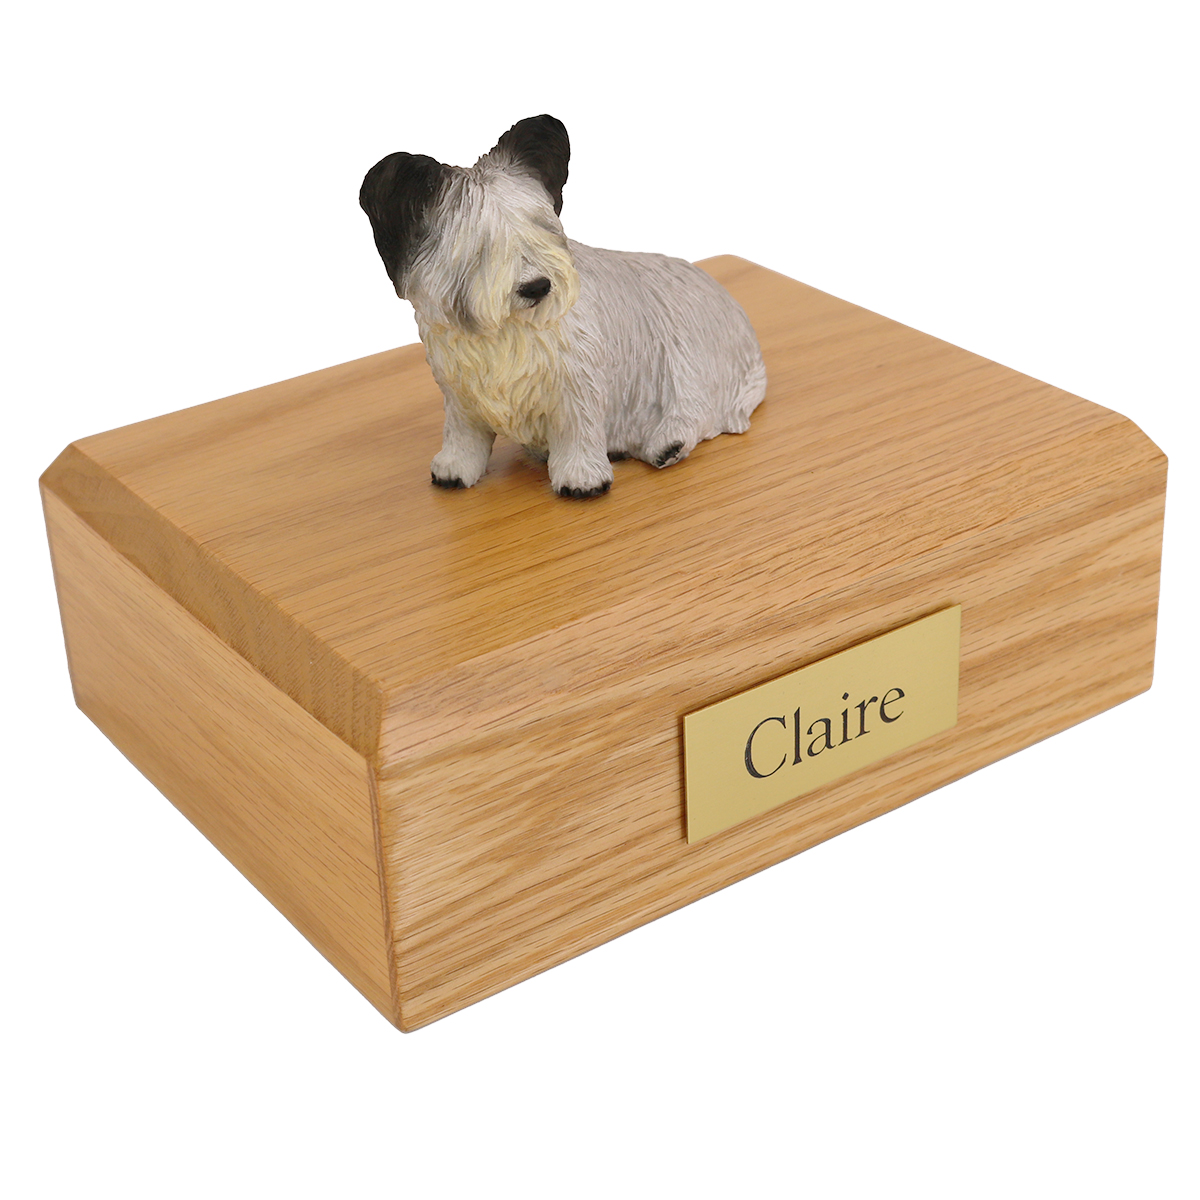 Dog, Skye Terrier - Figurine Urn